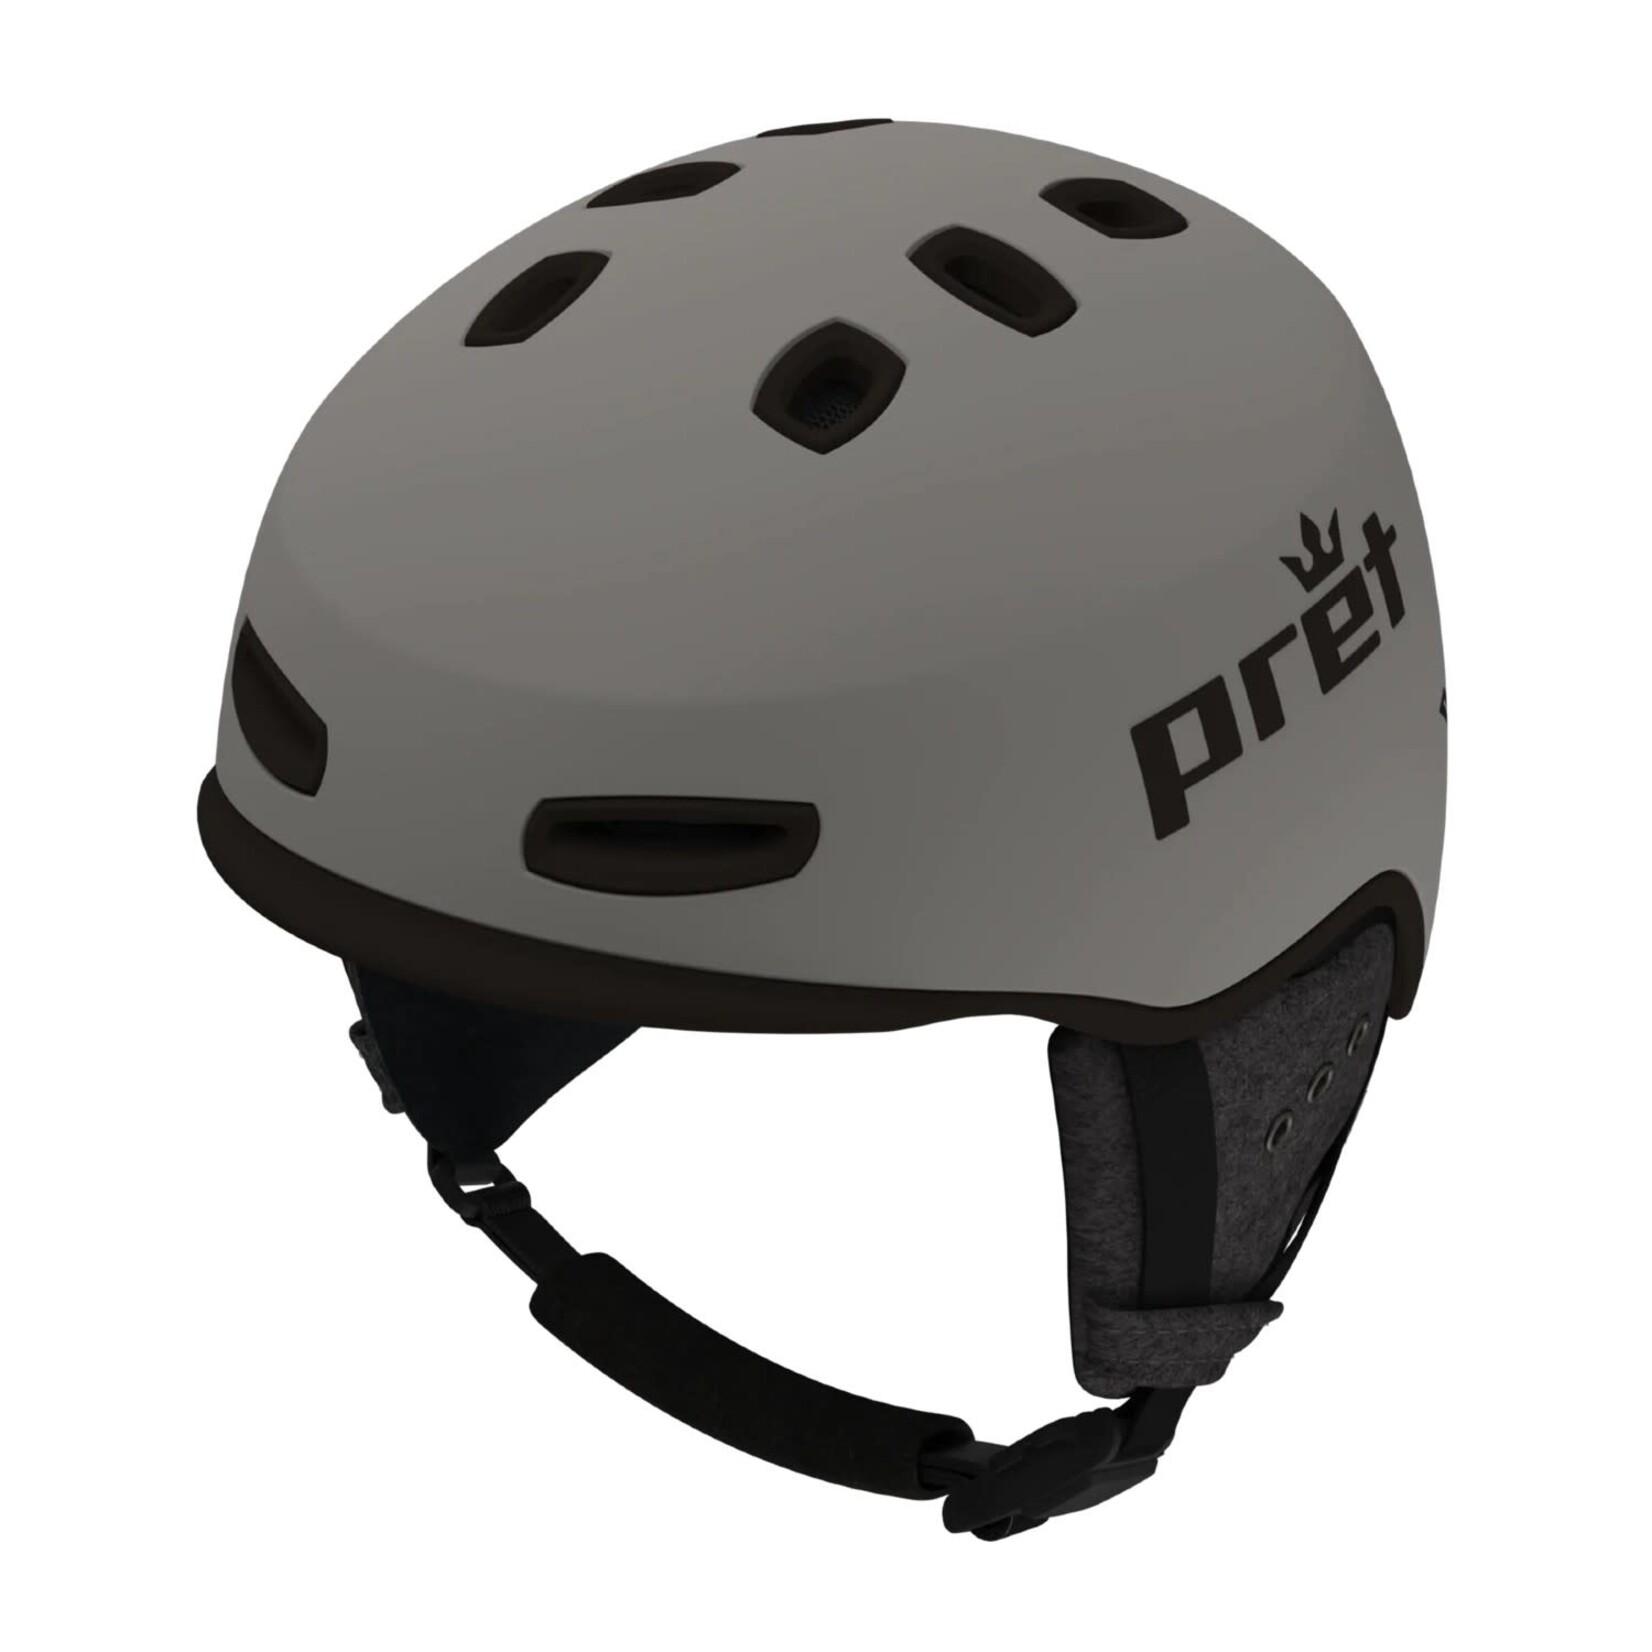 Pret Cynic X2 SP Ski Helmet スキー ヘルメット写真の追加有難う御座います